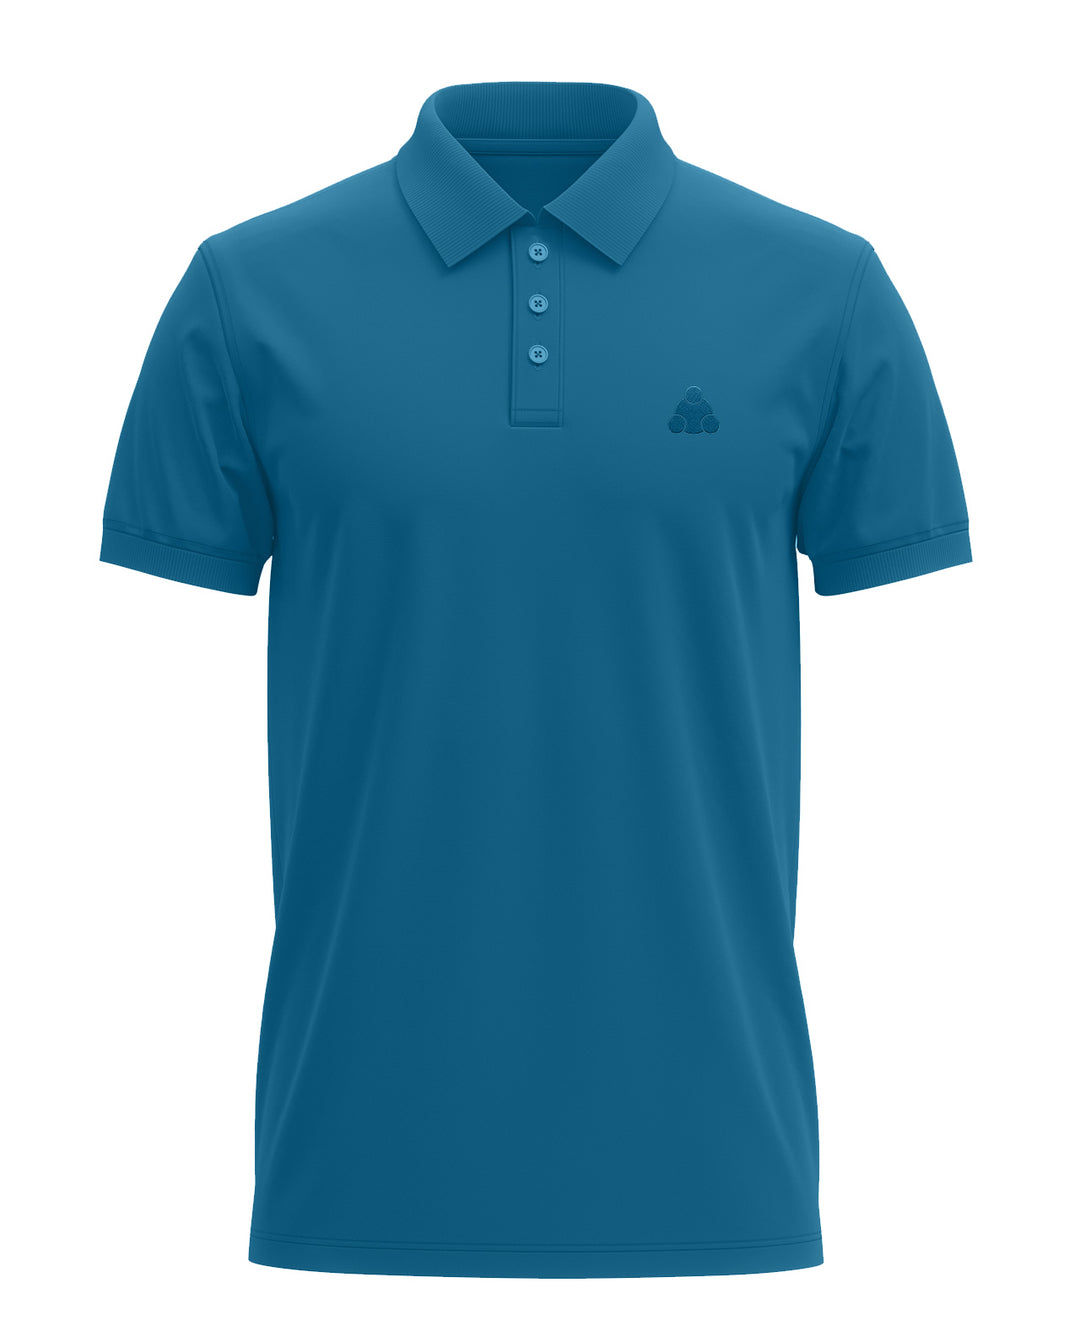 Trinizen basics Polo T-shirt Embroidered Logo - Petrol Blue